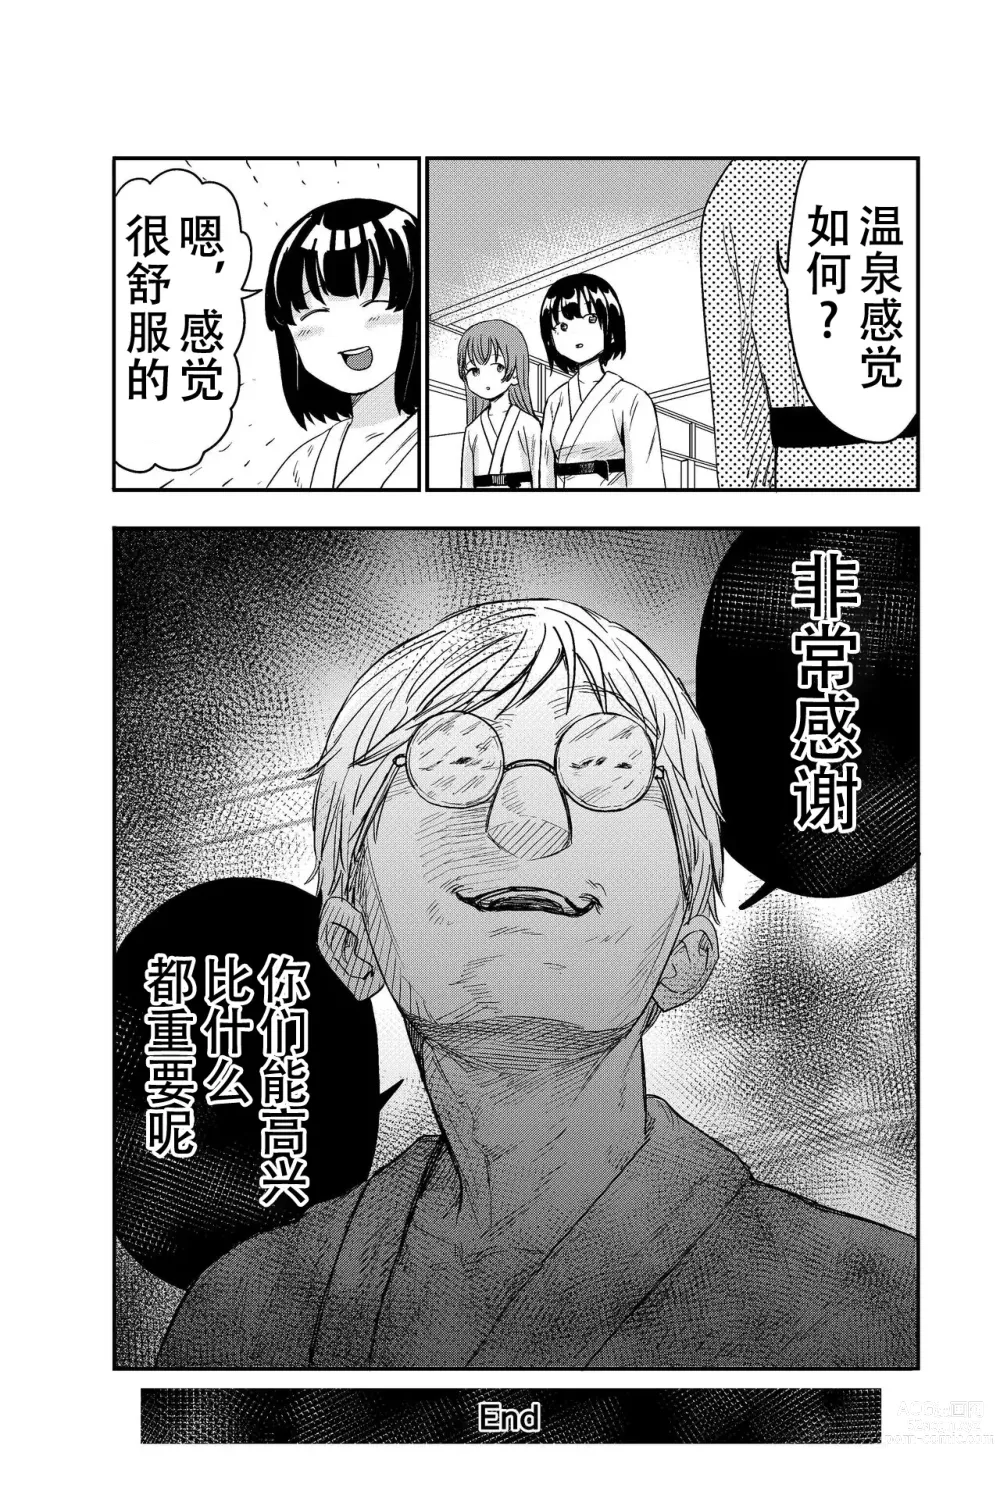 Page 48 of doujinshi Yuri no Ma Onsen e Youkoso